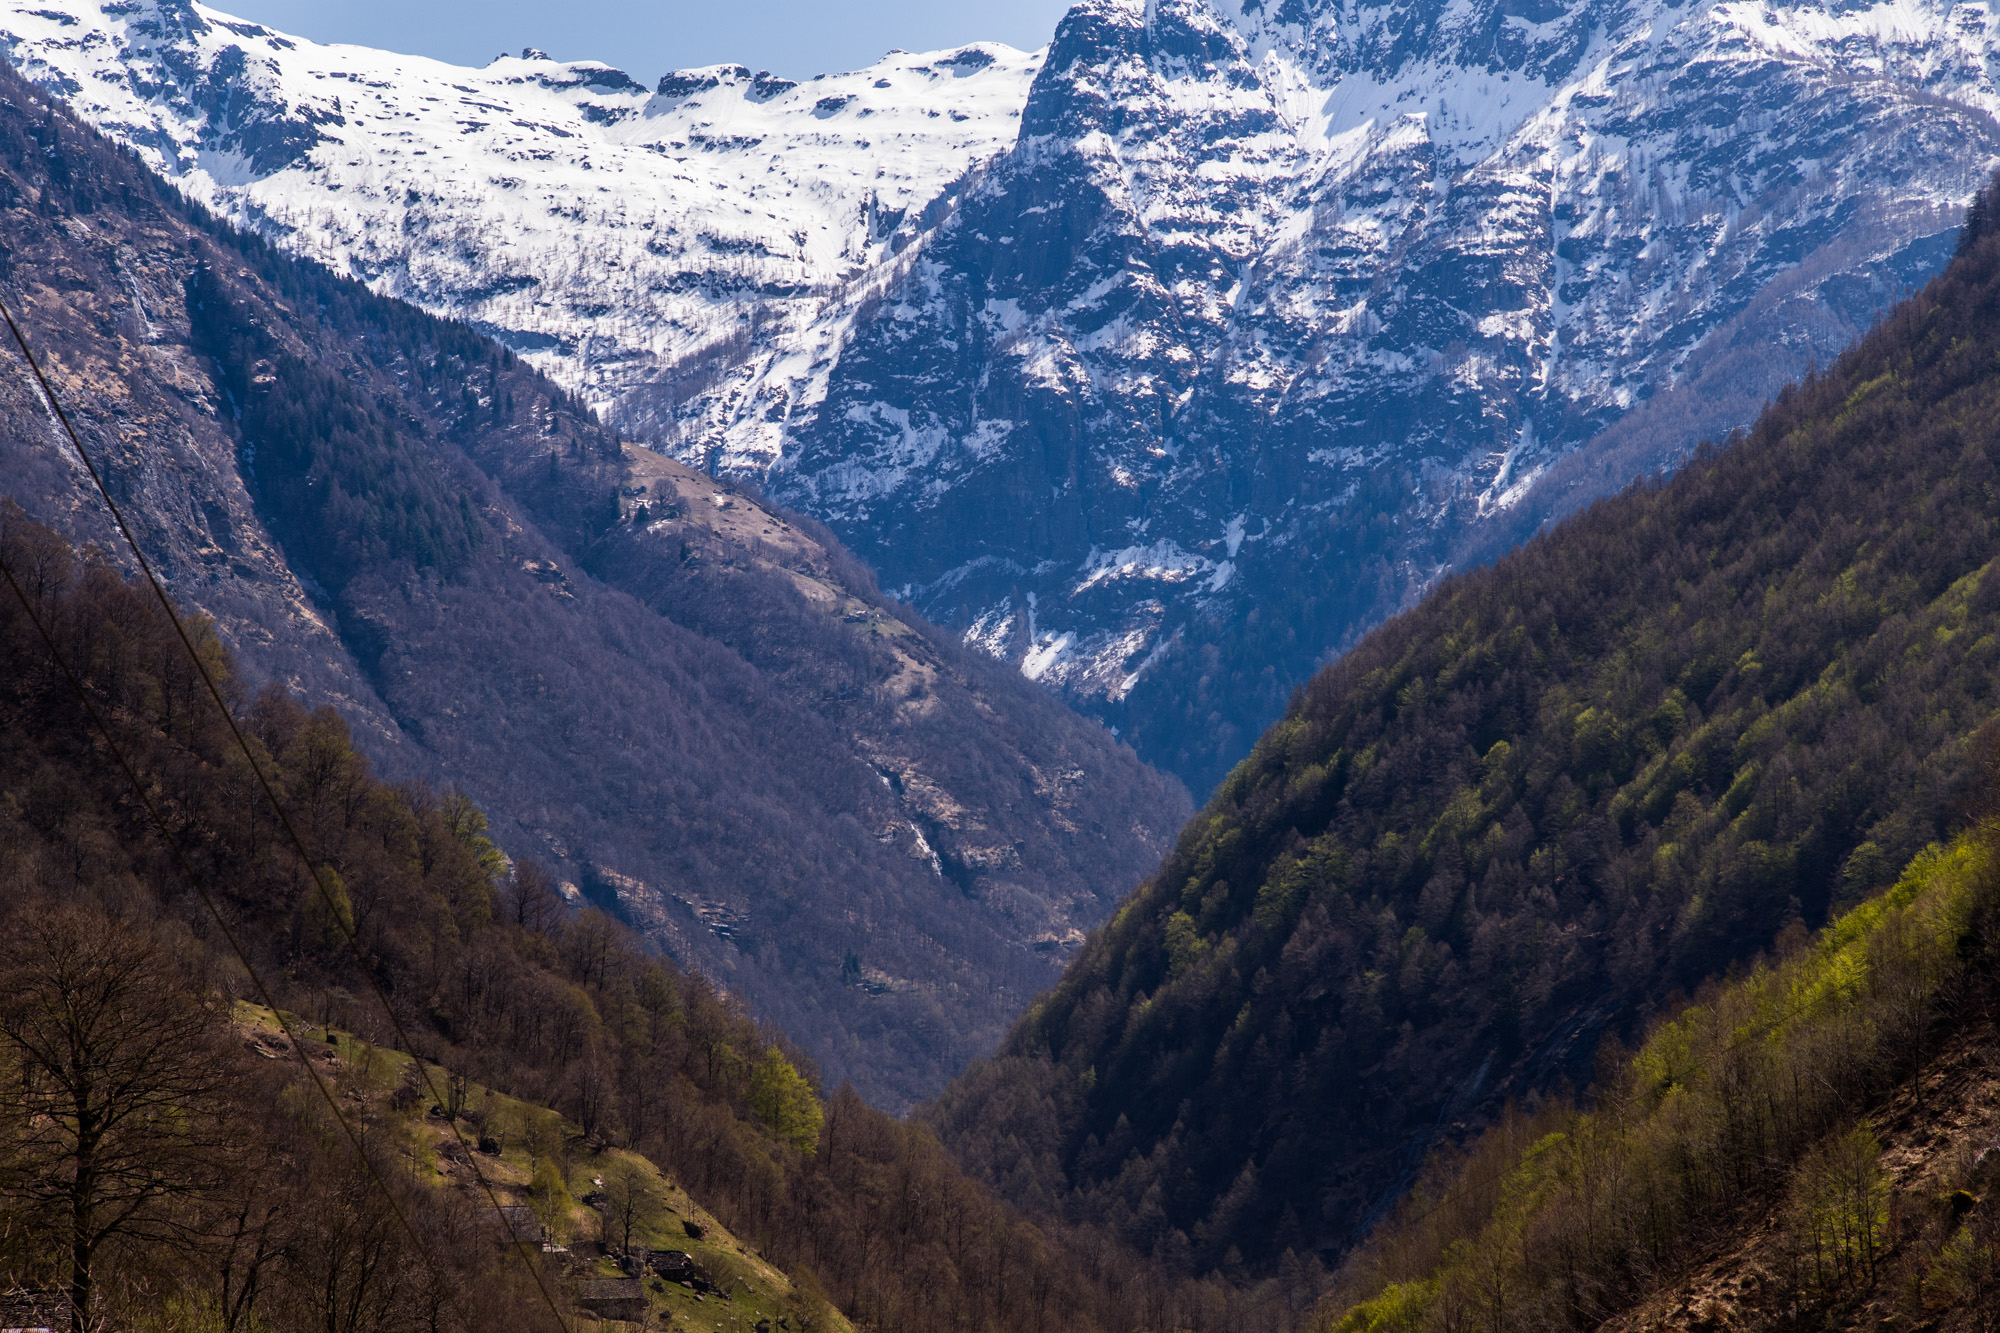 The Lepontine Alps